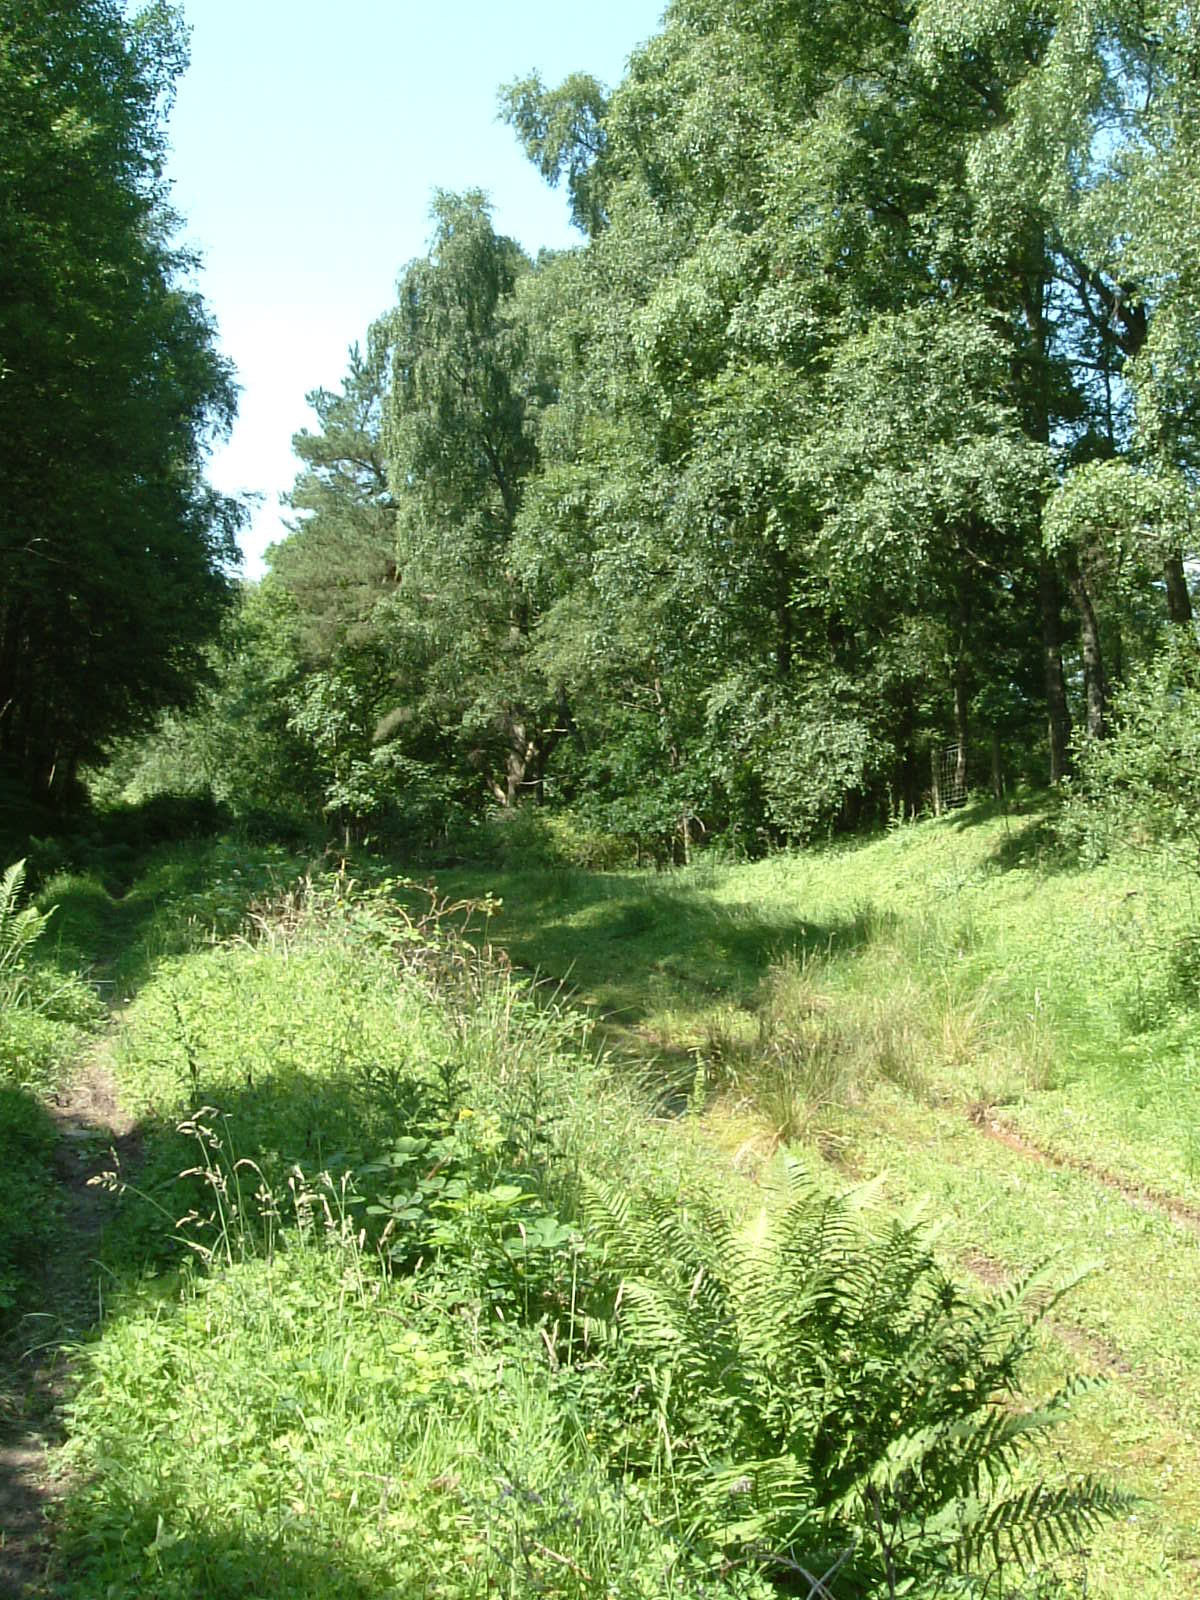 The disused railway line near Duntreath Castle